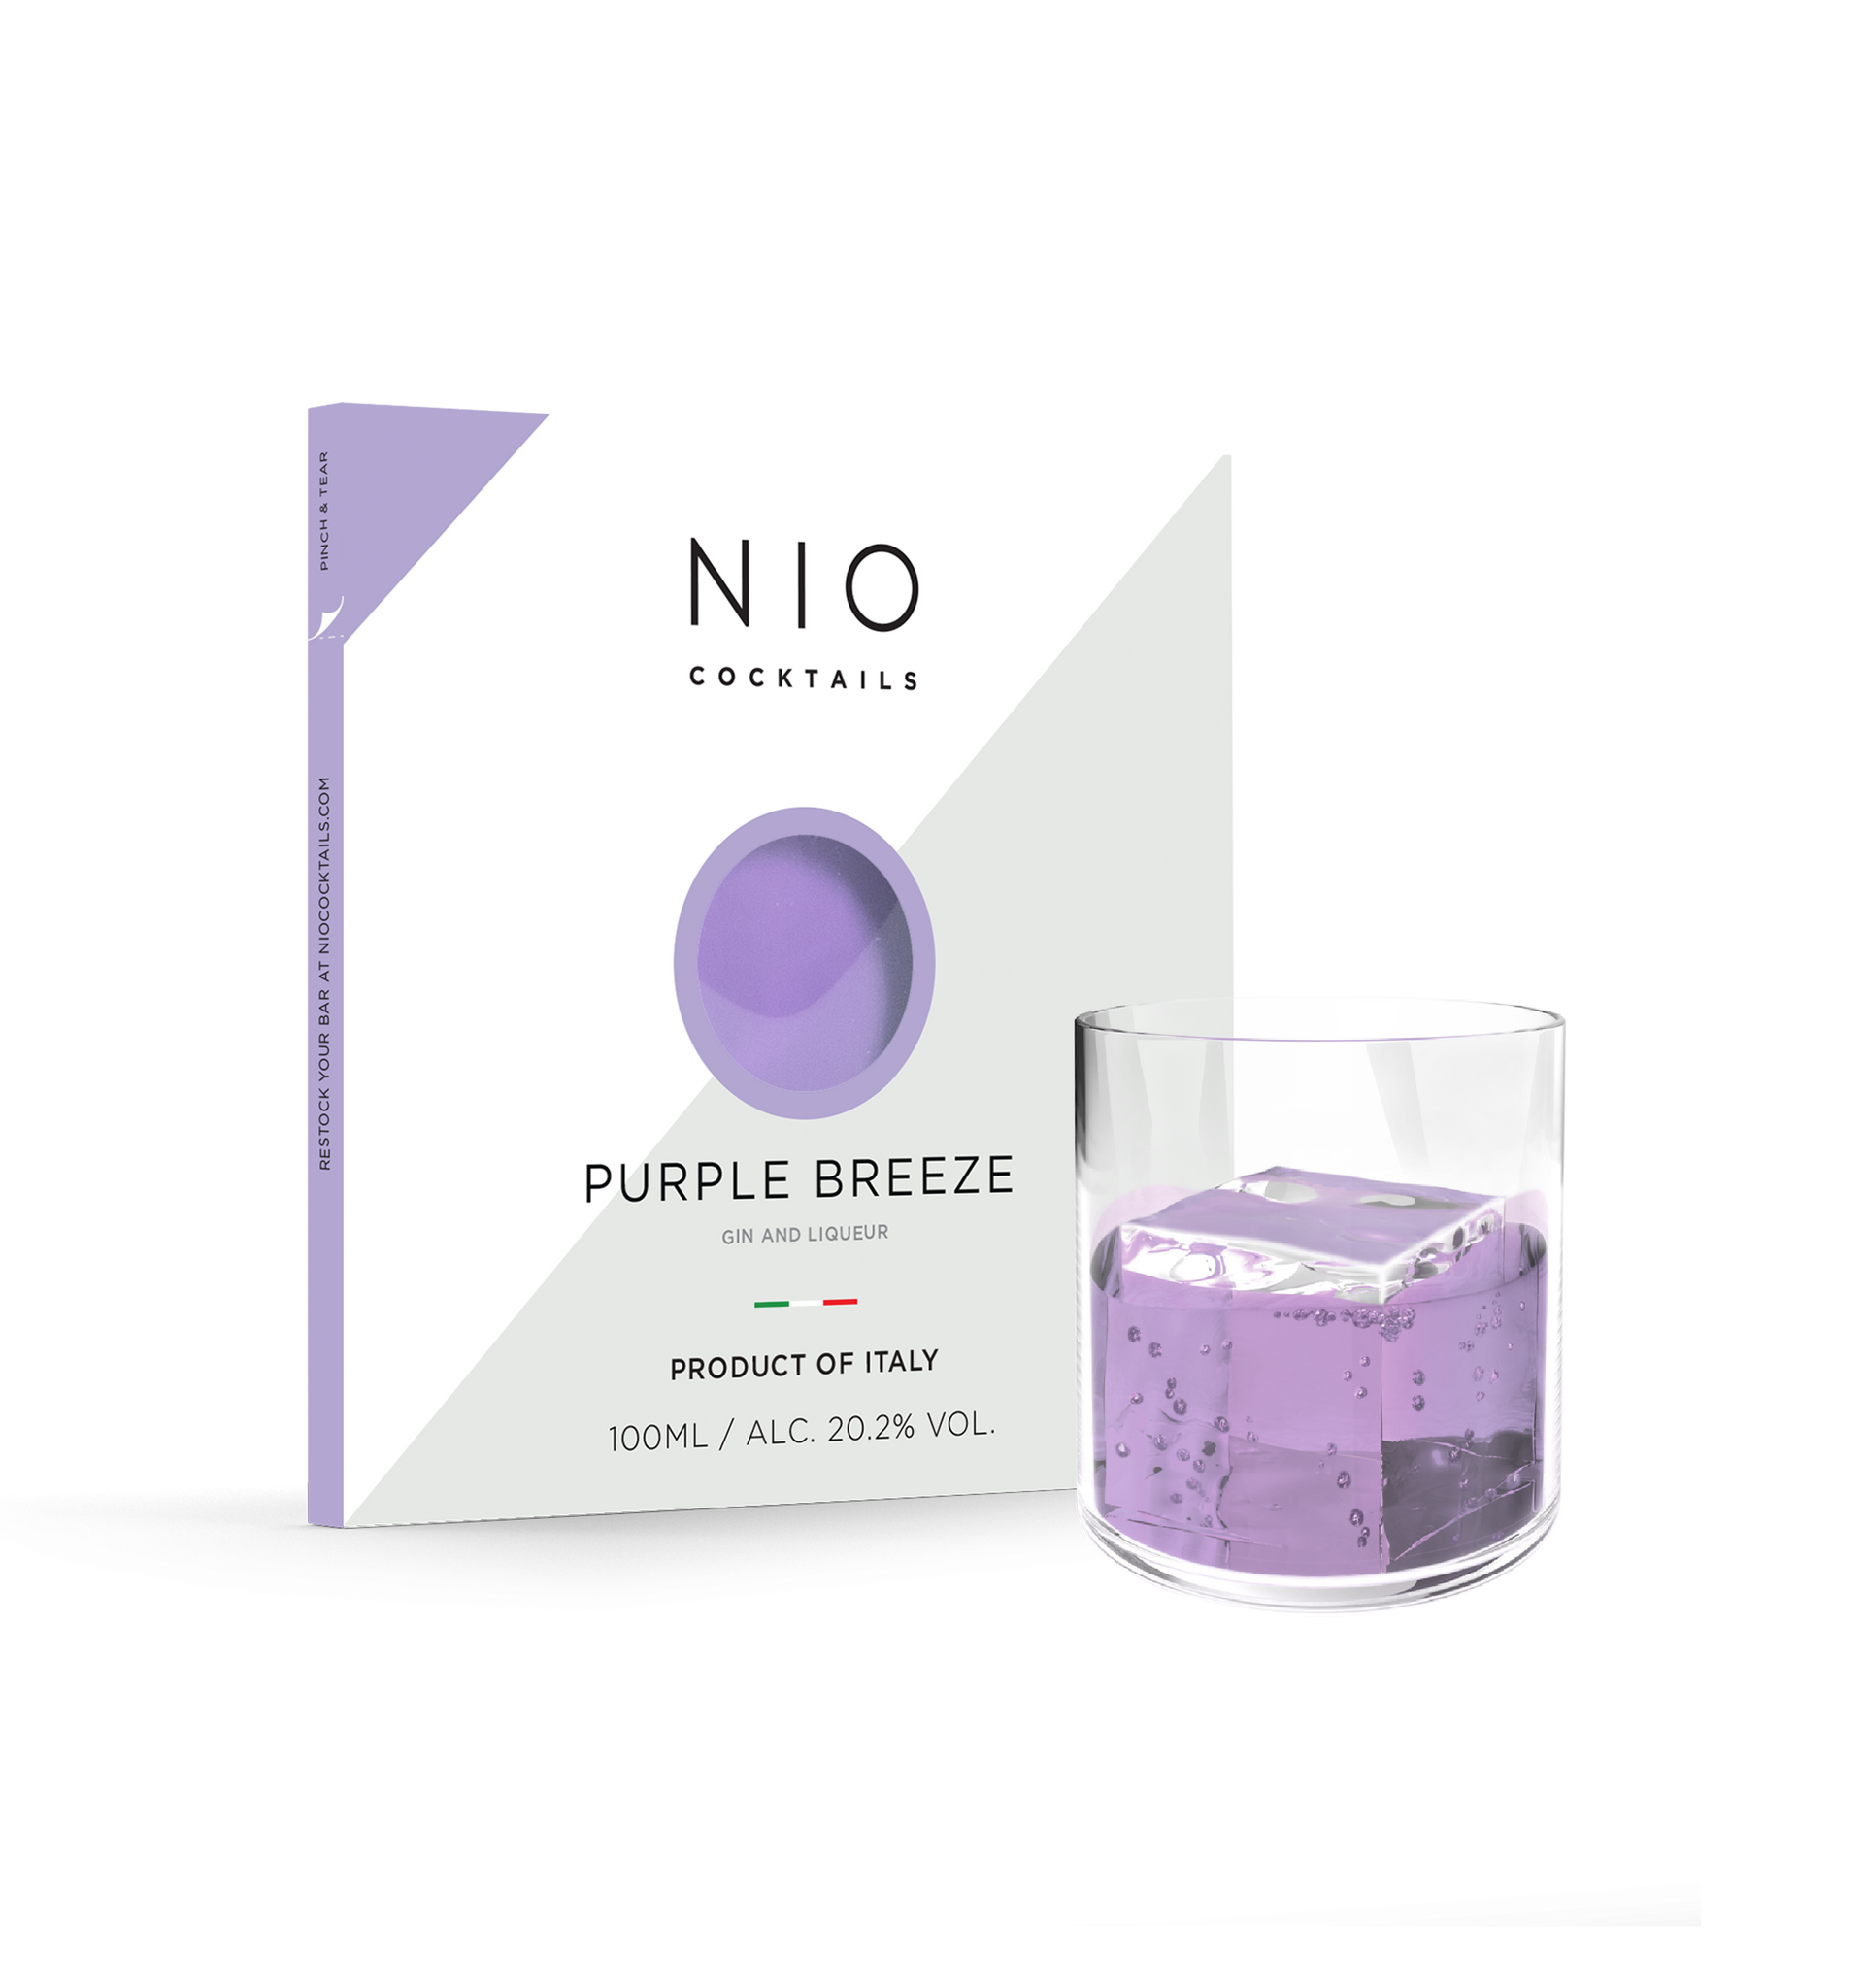 NIO COCKTAILS Purple Breeze glass